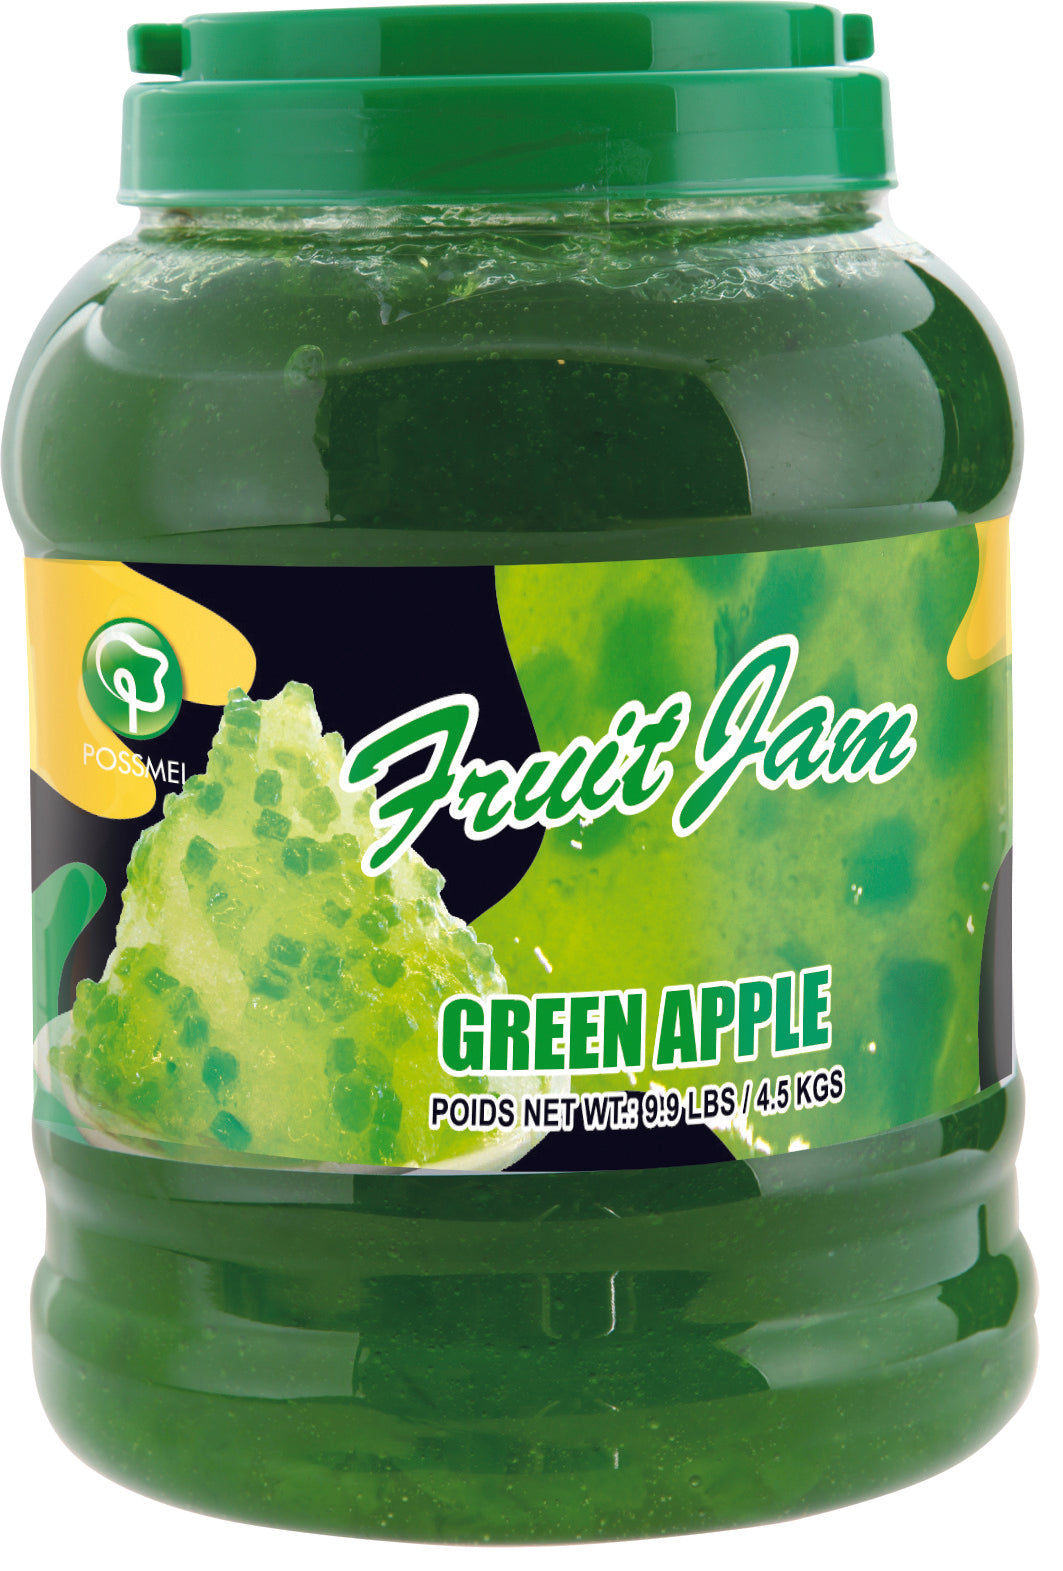 Possmei Natate Coco Green Apple